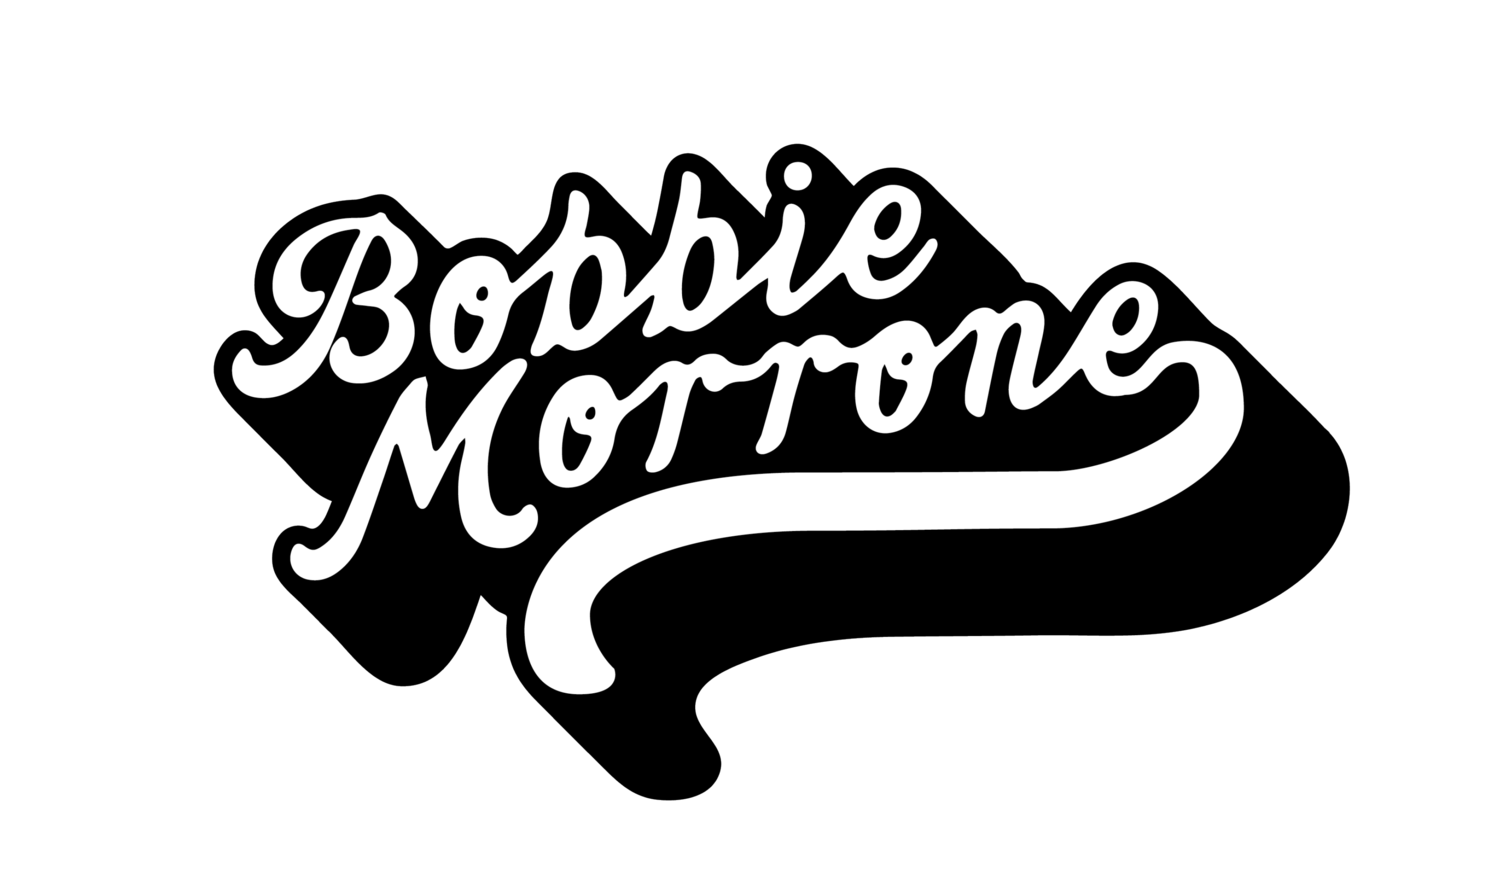  Bobbie Morrone